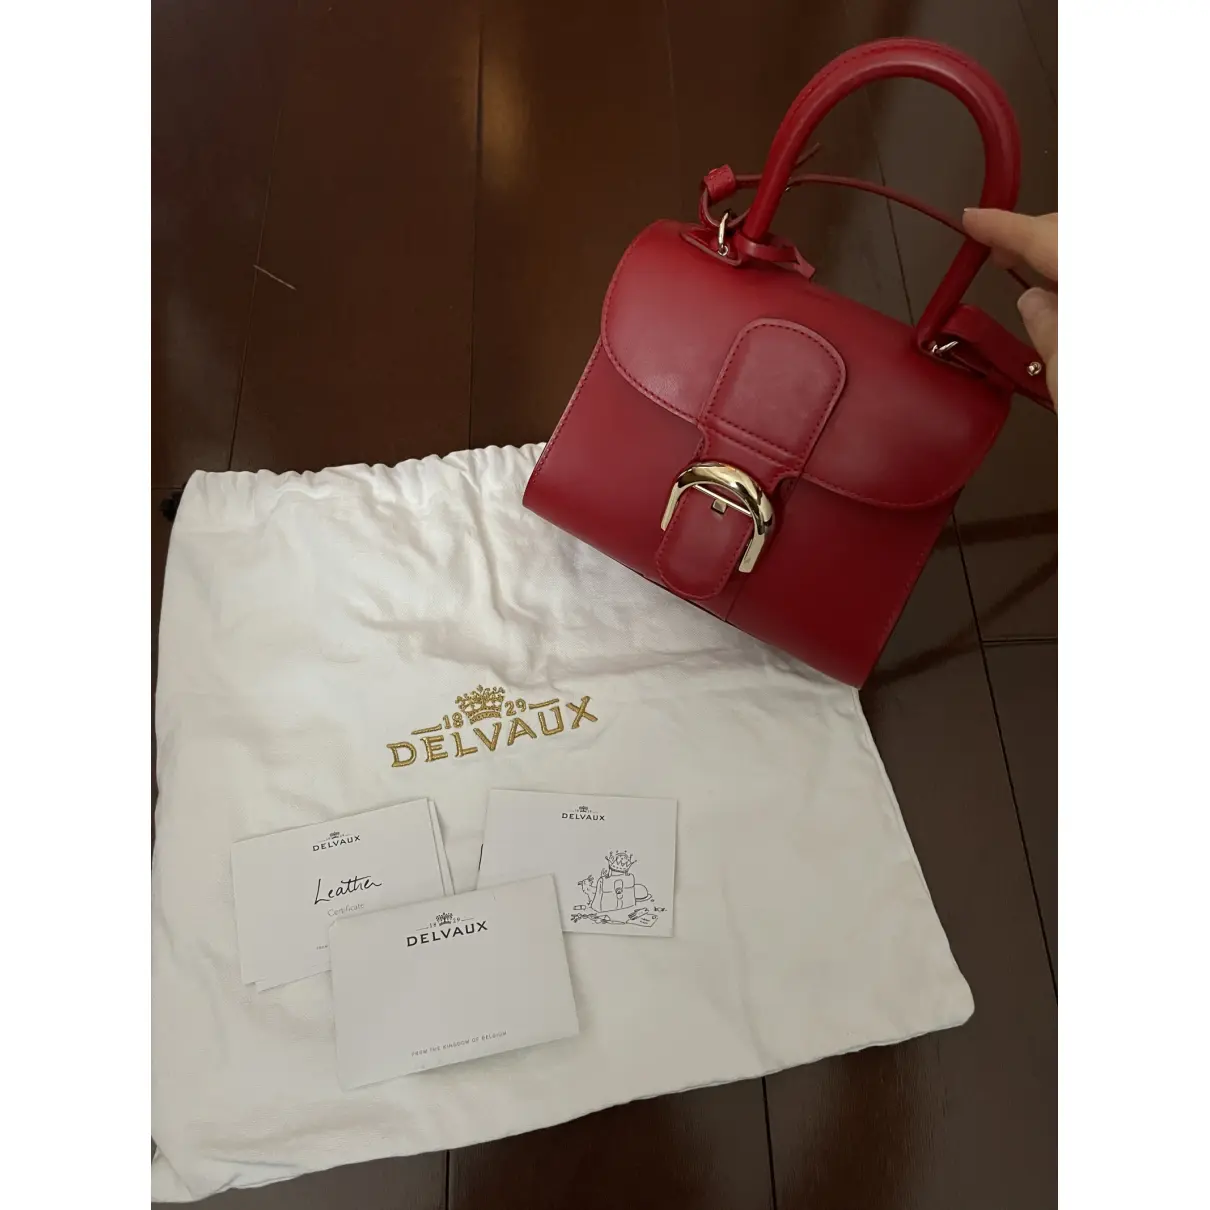 Brillant leather bag Delvaux